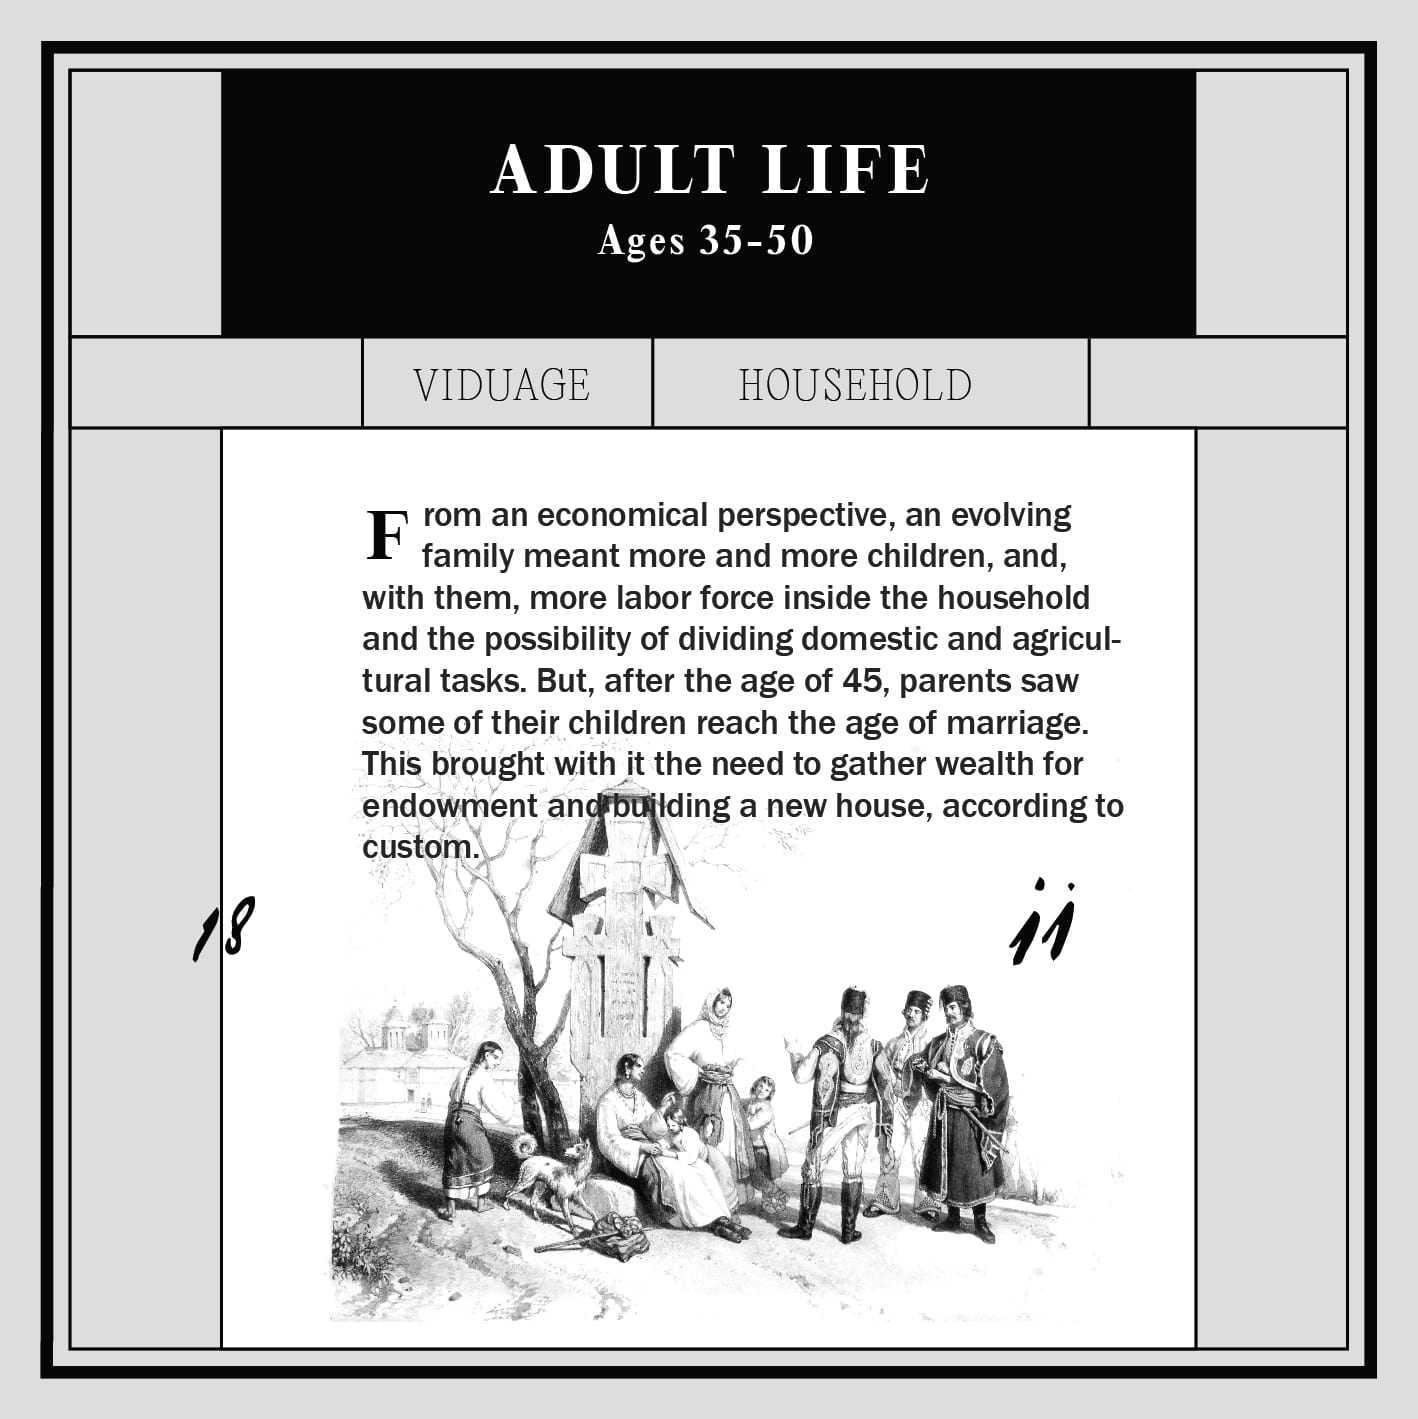 Adult life